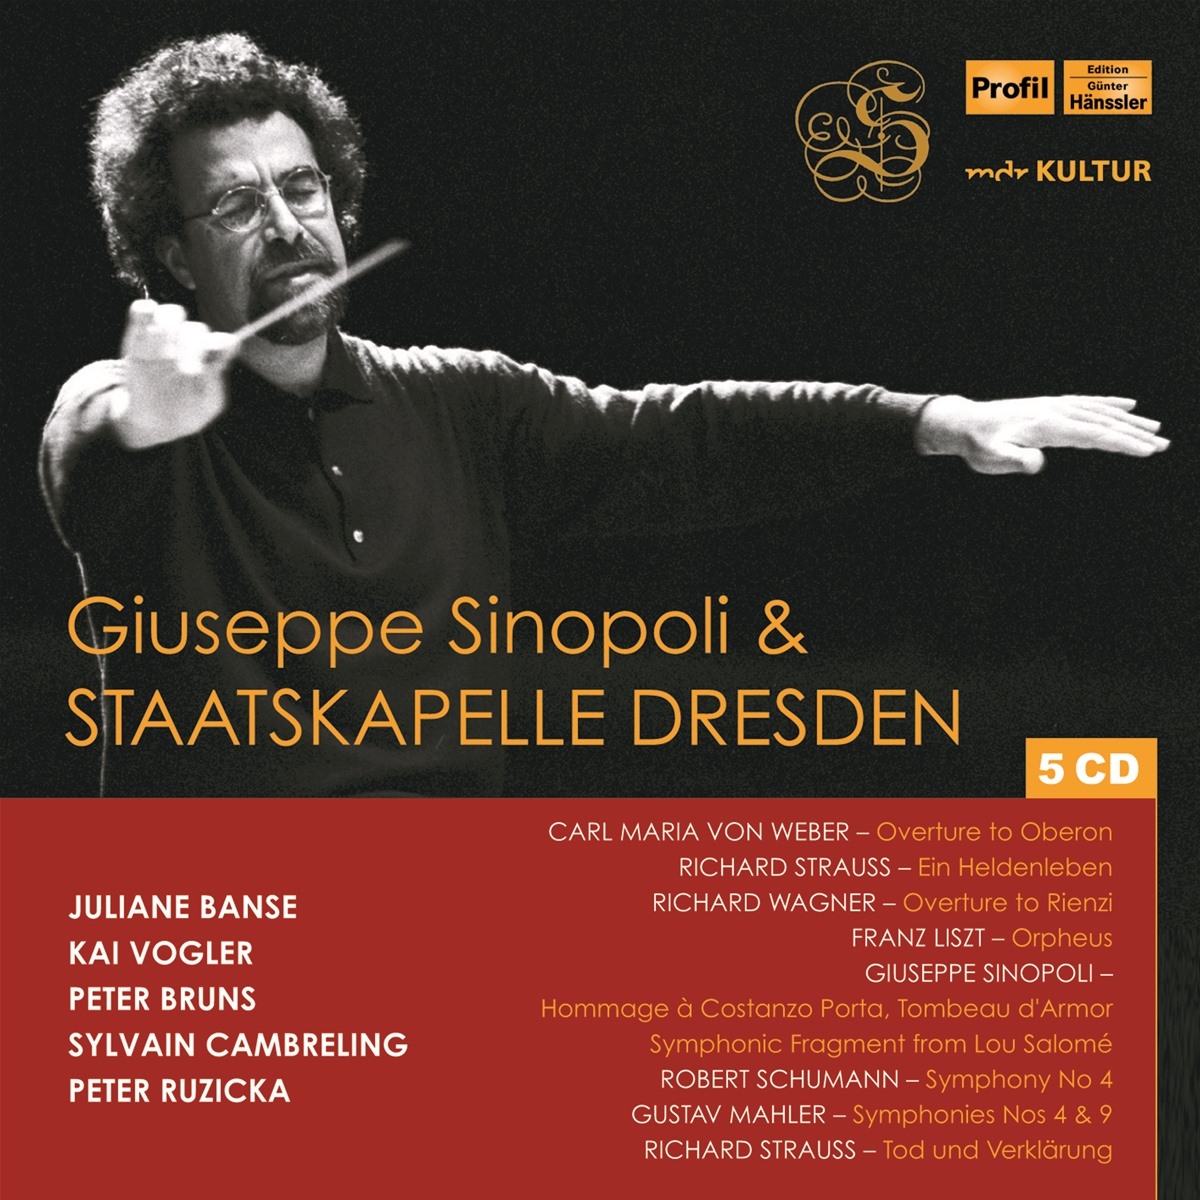 Giuseppe Sinopoli - Conductor and Composer